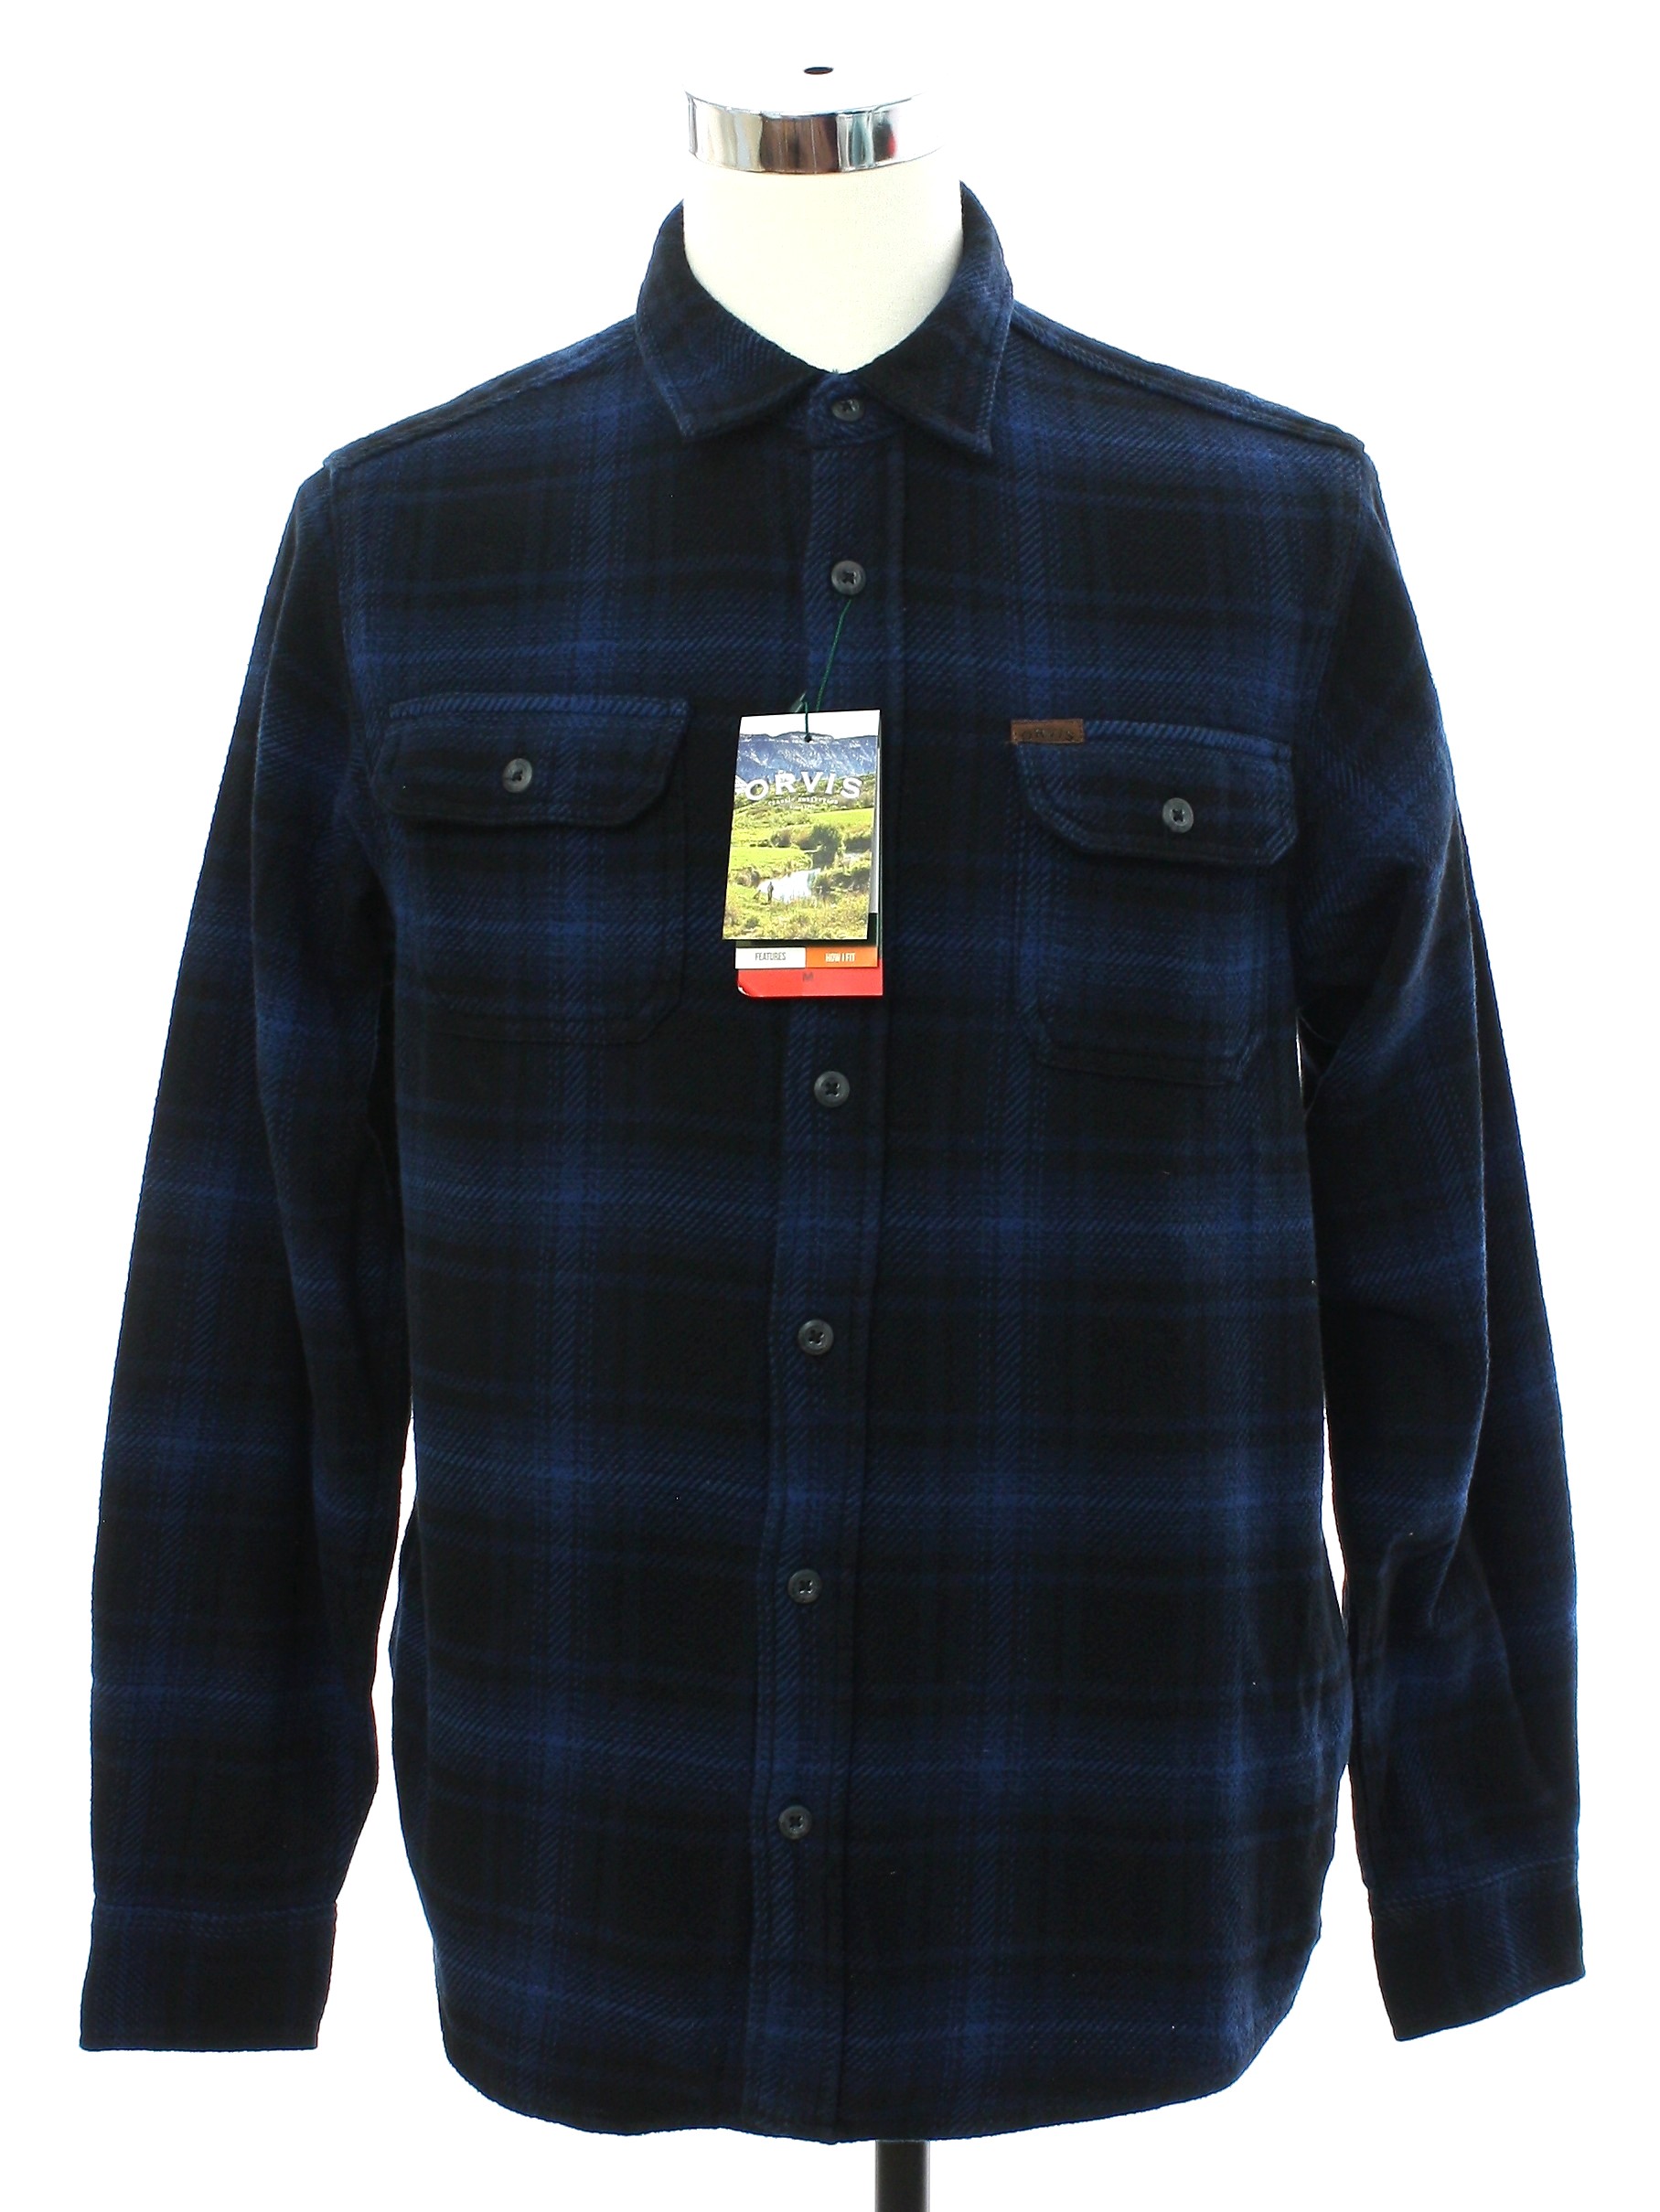 Jacket: Newer Than 90s -Orvis- Mens black background, blue plaid